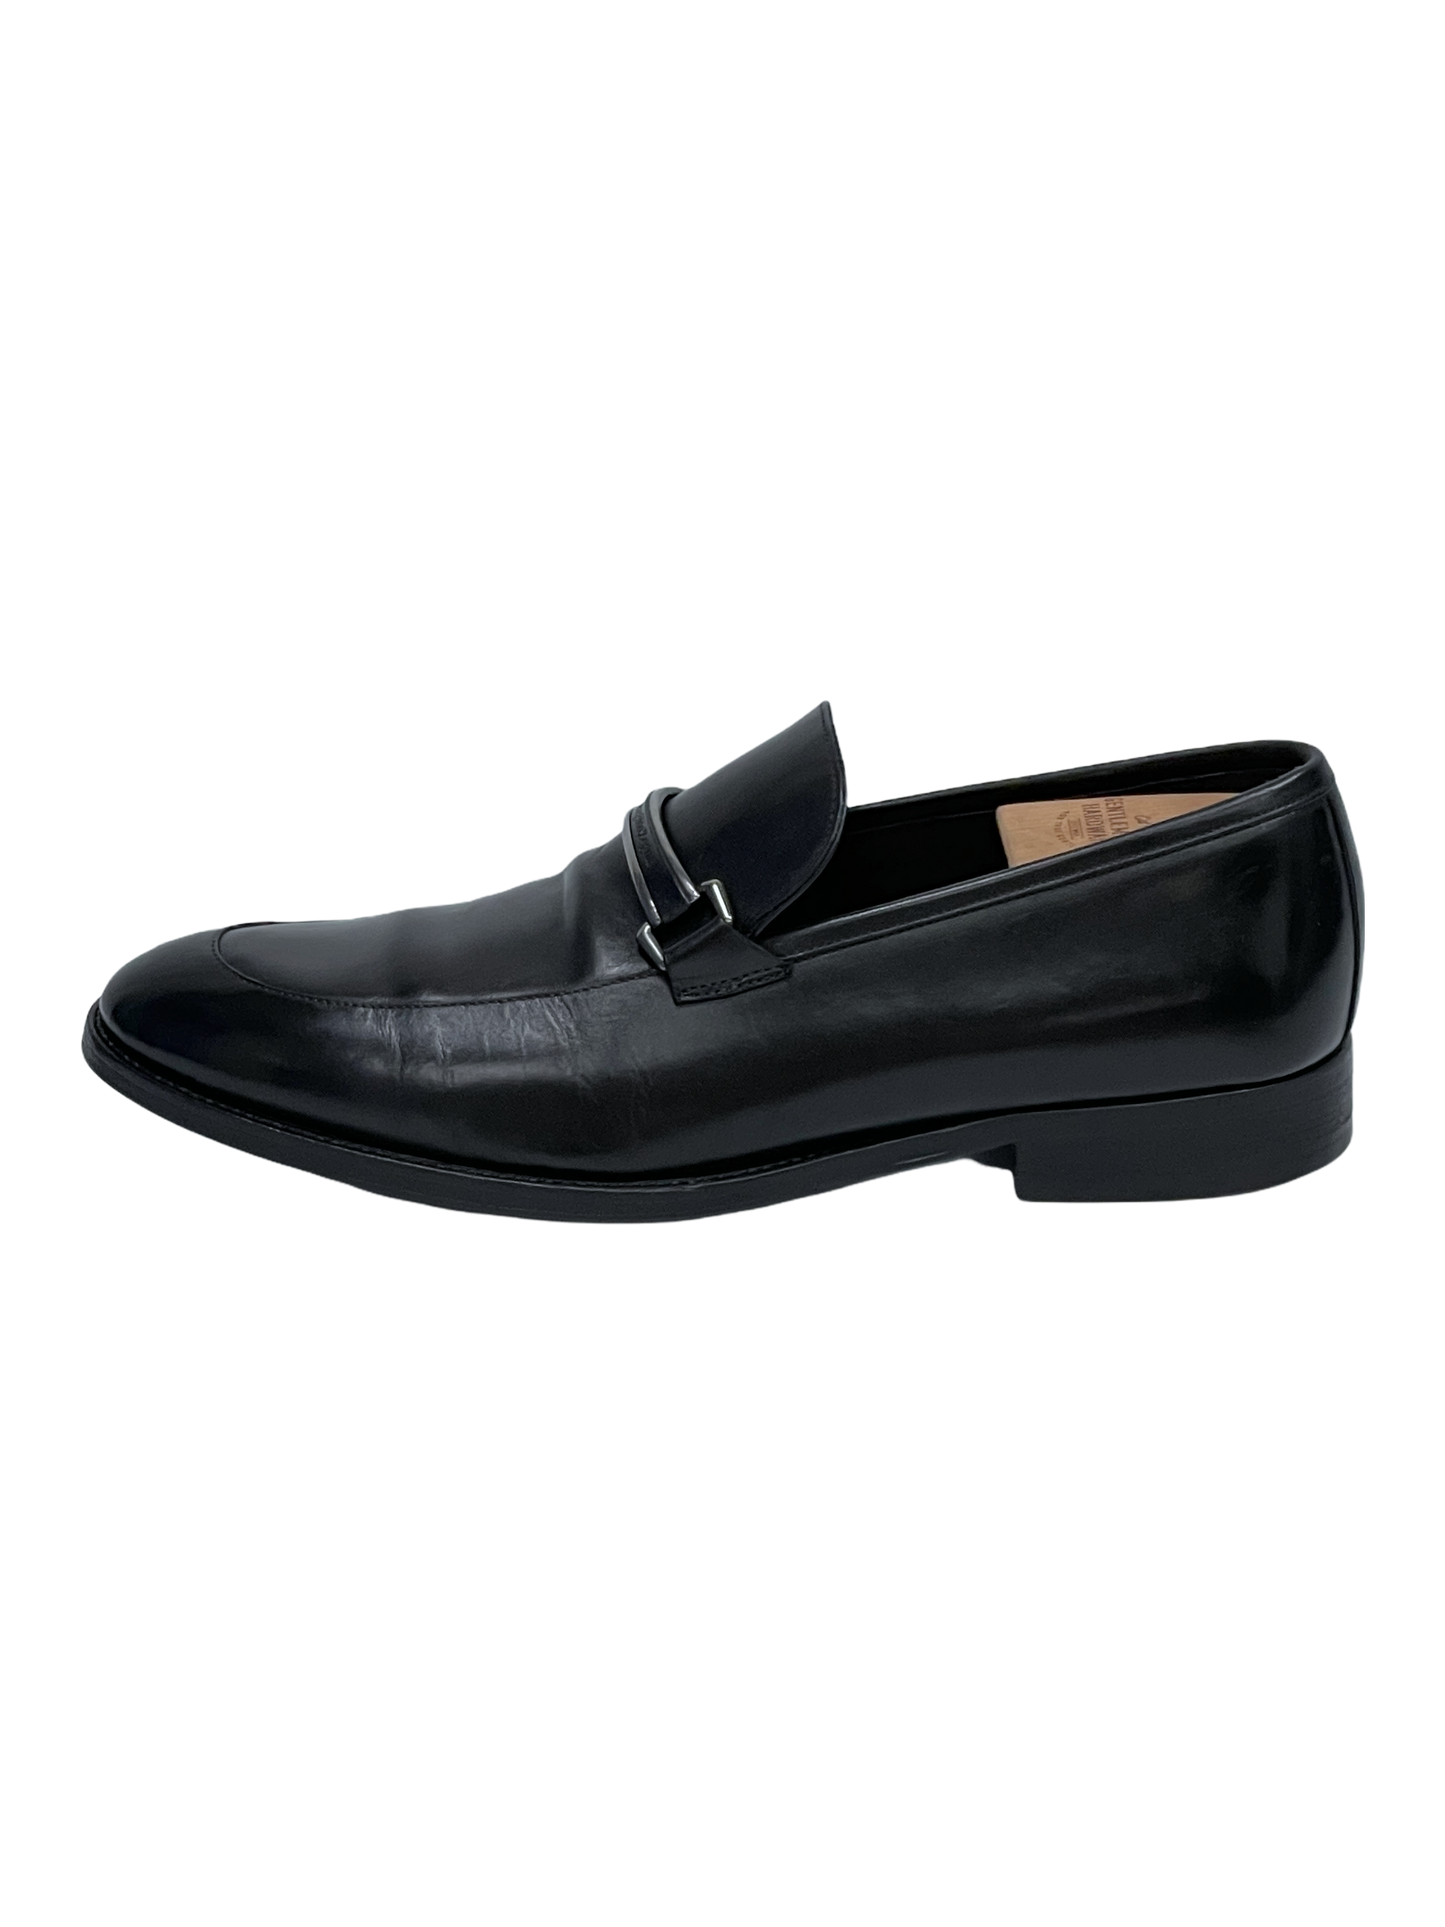 Ermenegildo Zegna Black Leather Penny Loafers 8 D US